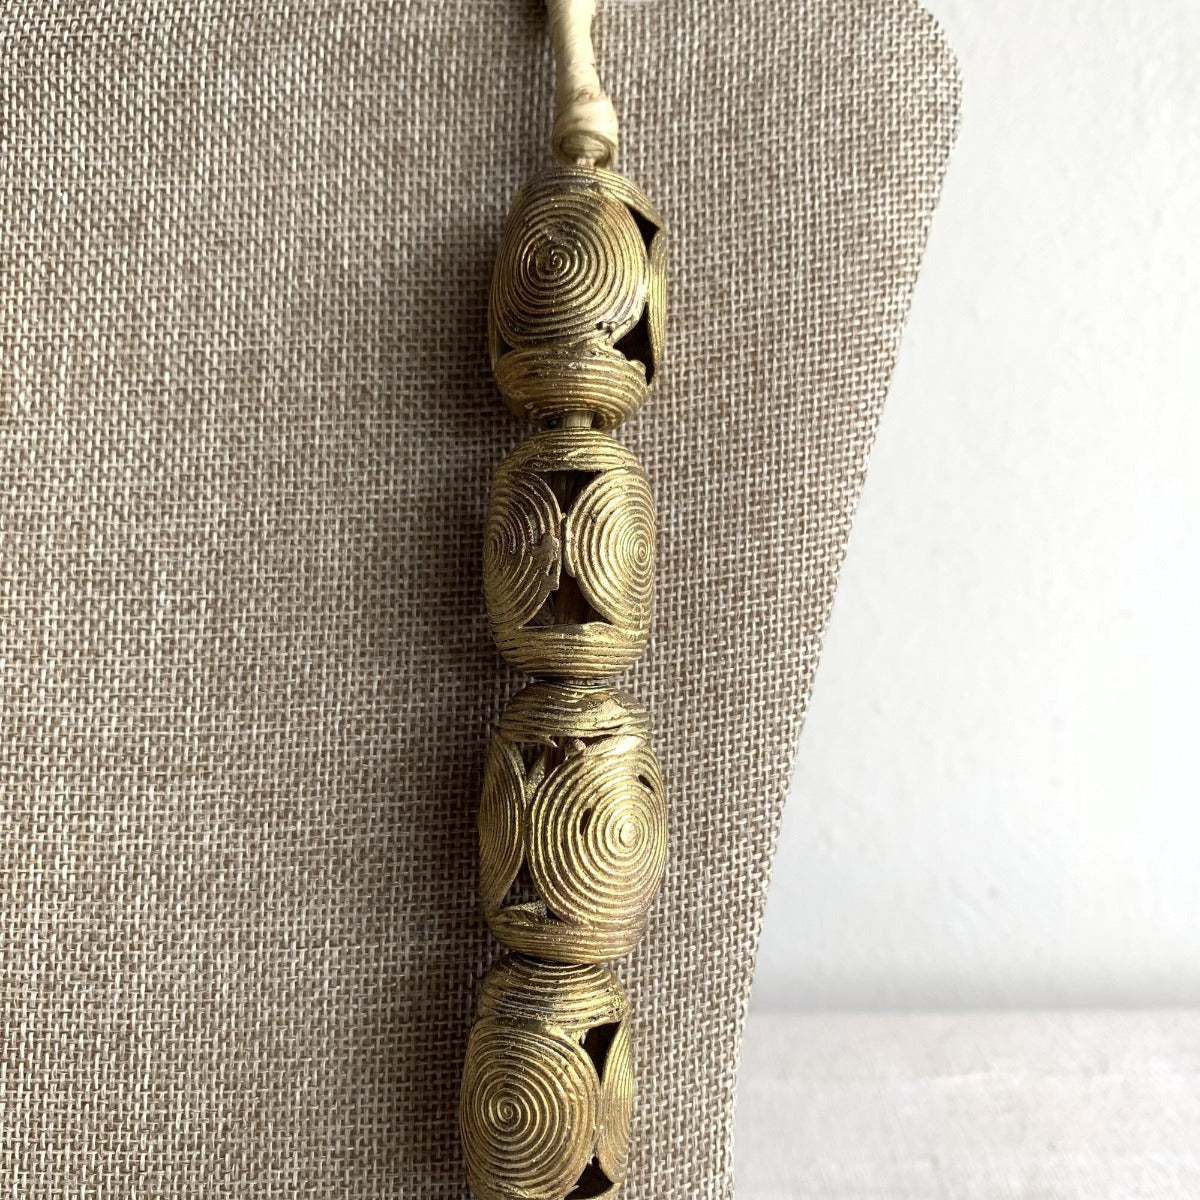 Handmade Ghanaian Brass Beaded Necklace - Large Beads Farafinya African Market Farafinya African Market 